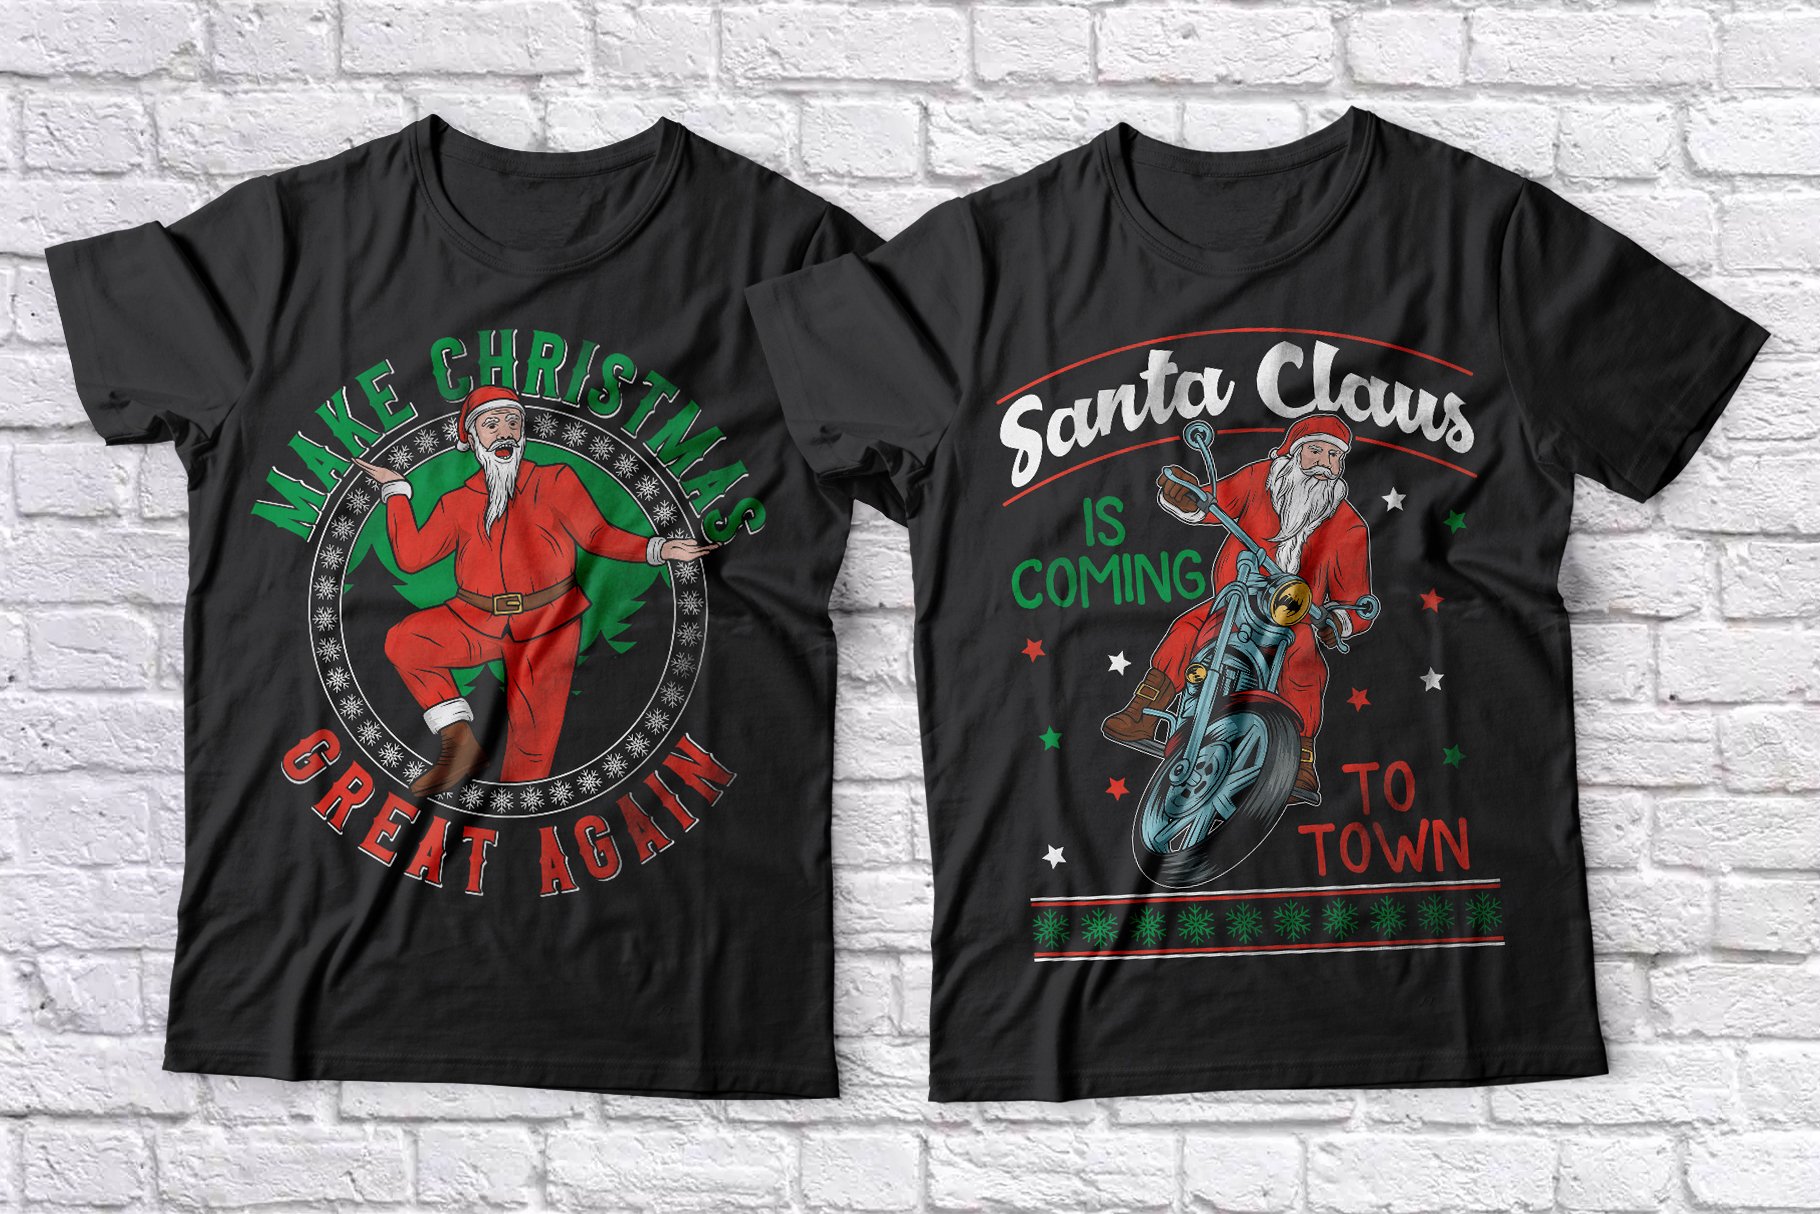 Black T-shirts with memorable funny Santa prints.